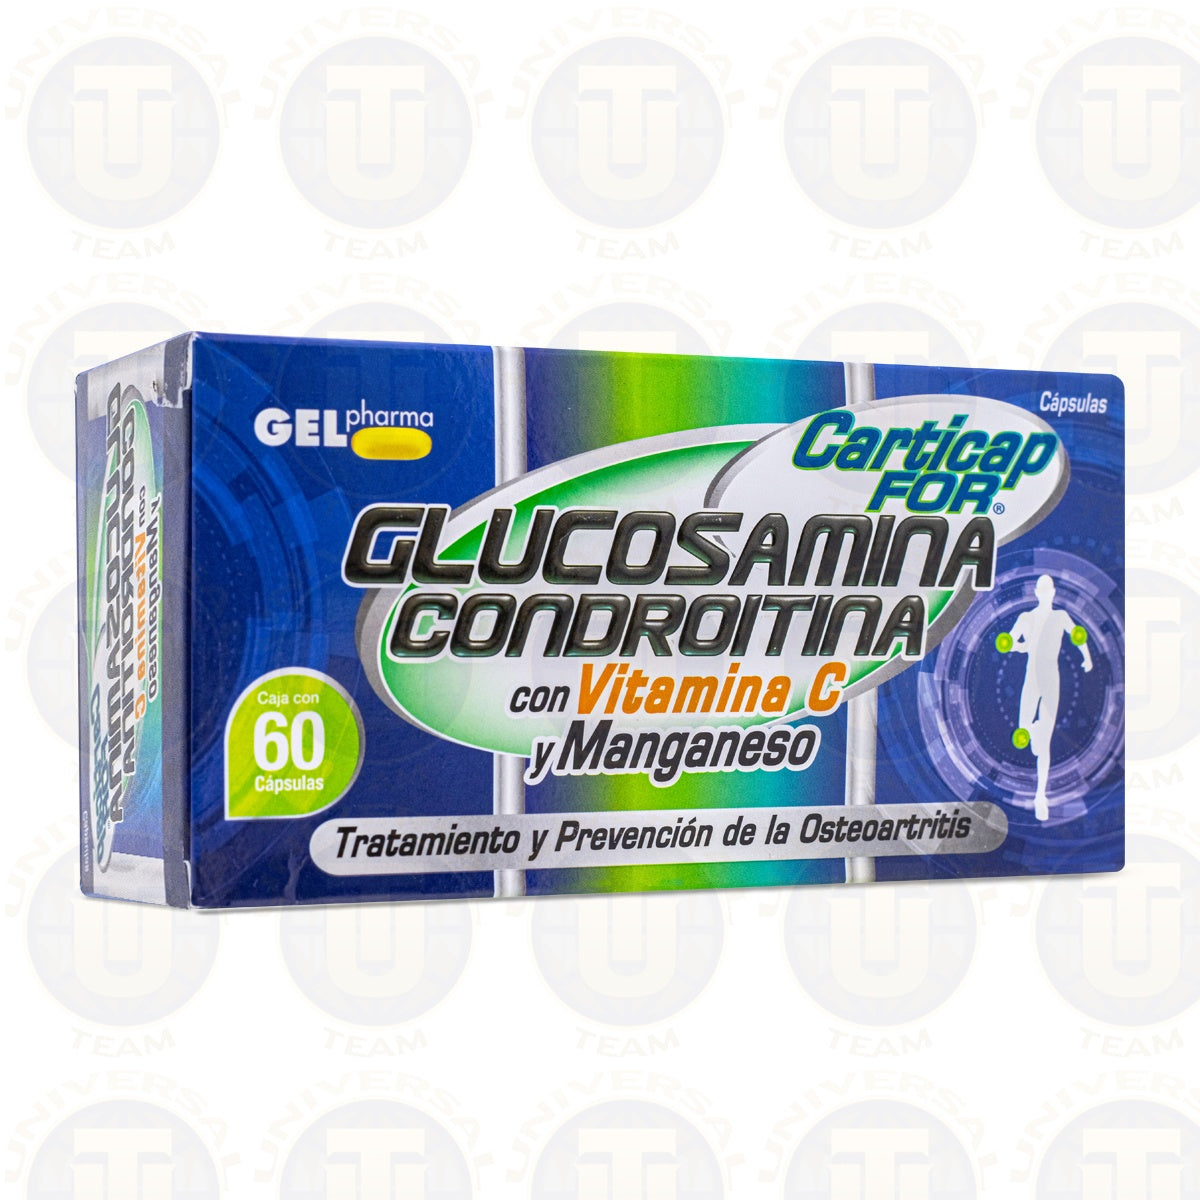 CARTICAP FOR GLUCOSAMINA CONDROITINA CON VITAMINA C Y MANGANESO 60 CAPS